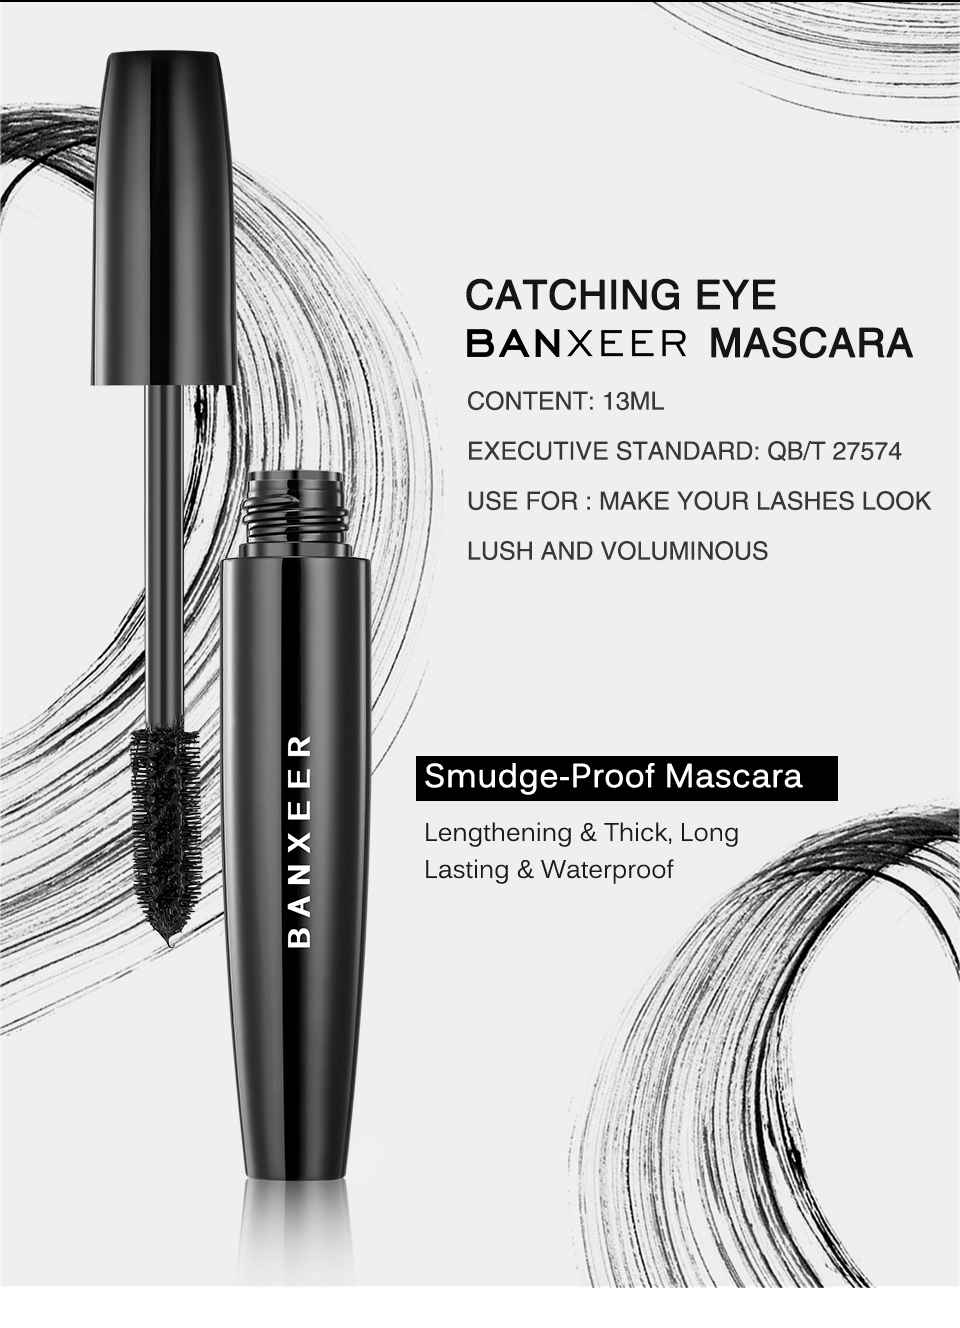 4d Silk Fiber Eyelash Mascara